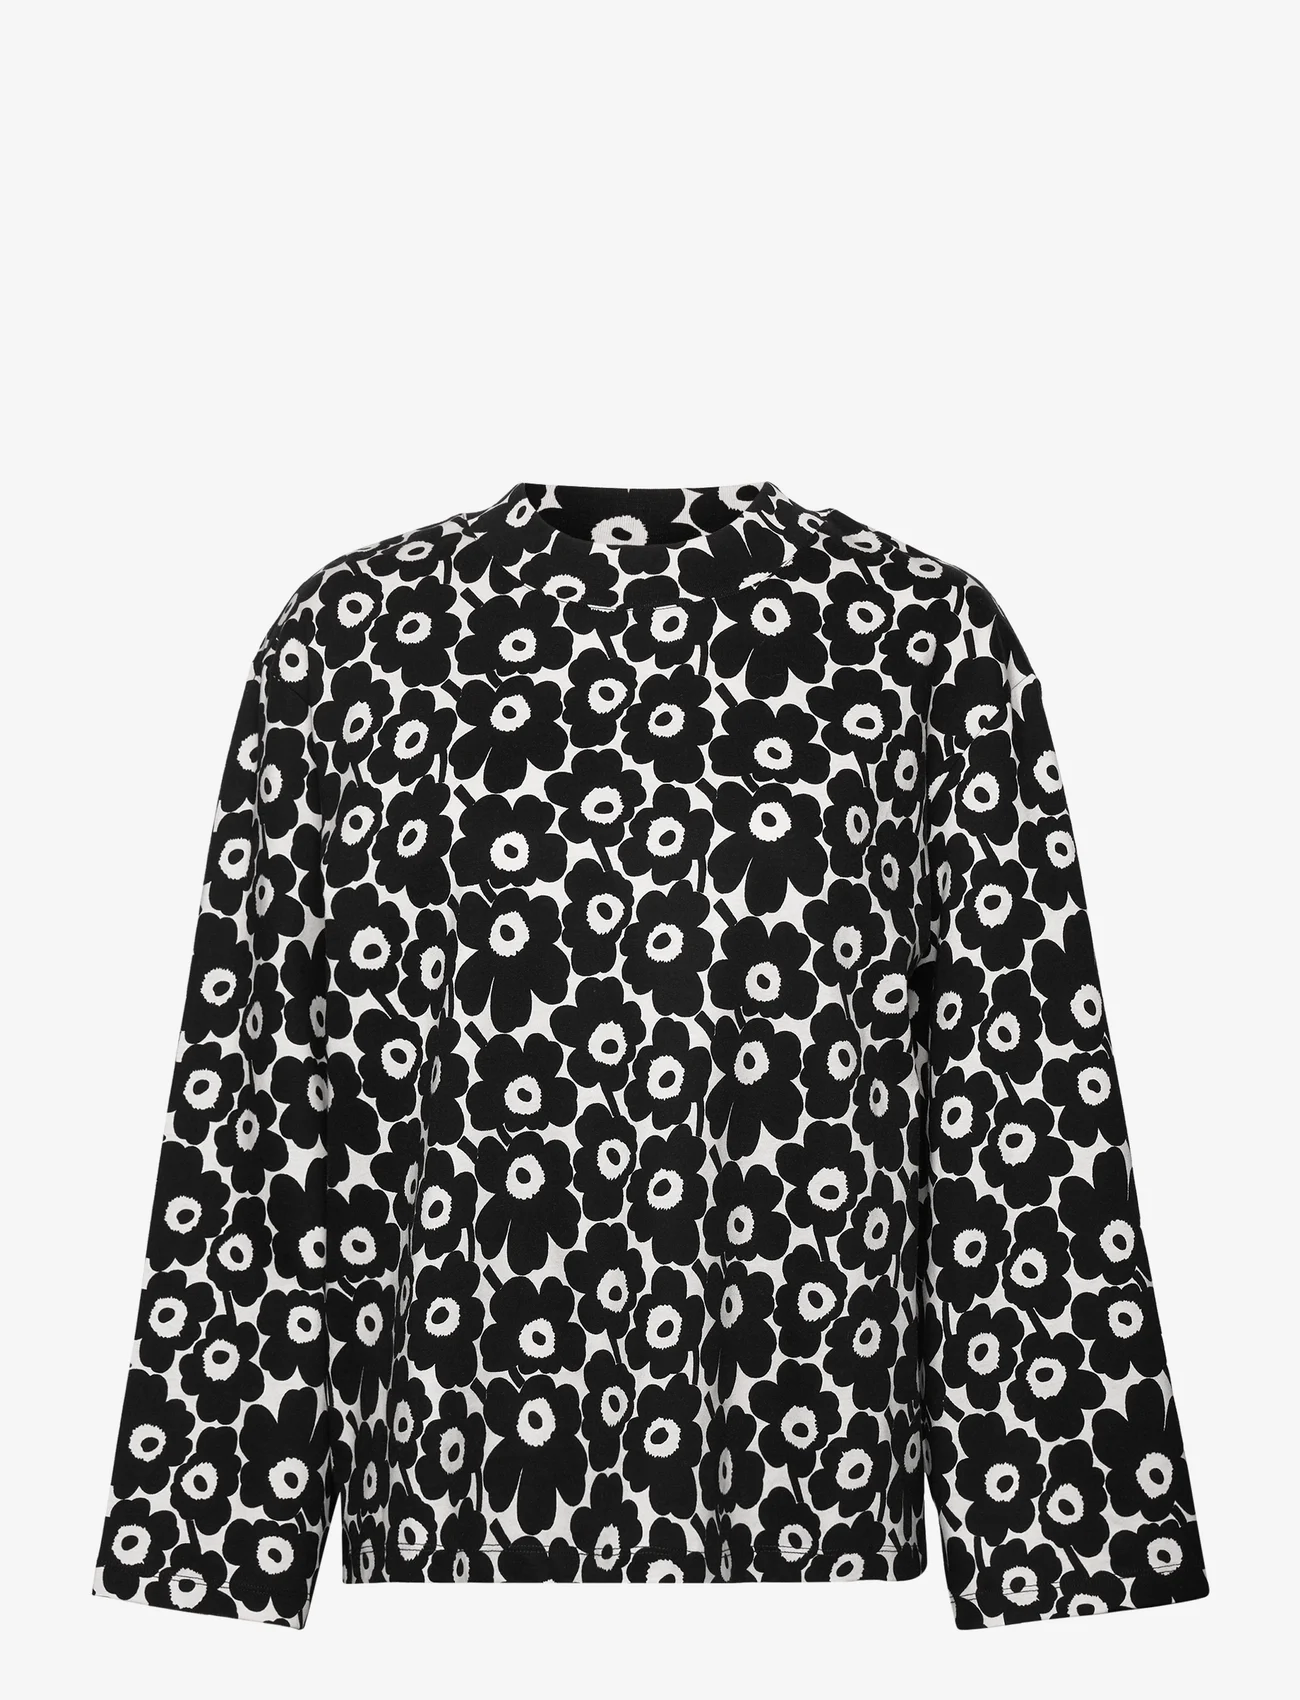 Marimekko - VALKEA UNIKKO - long-sleeved blouses - off-white, black - 0